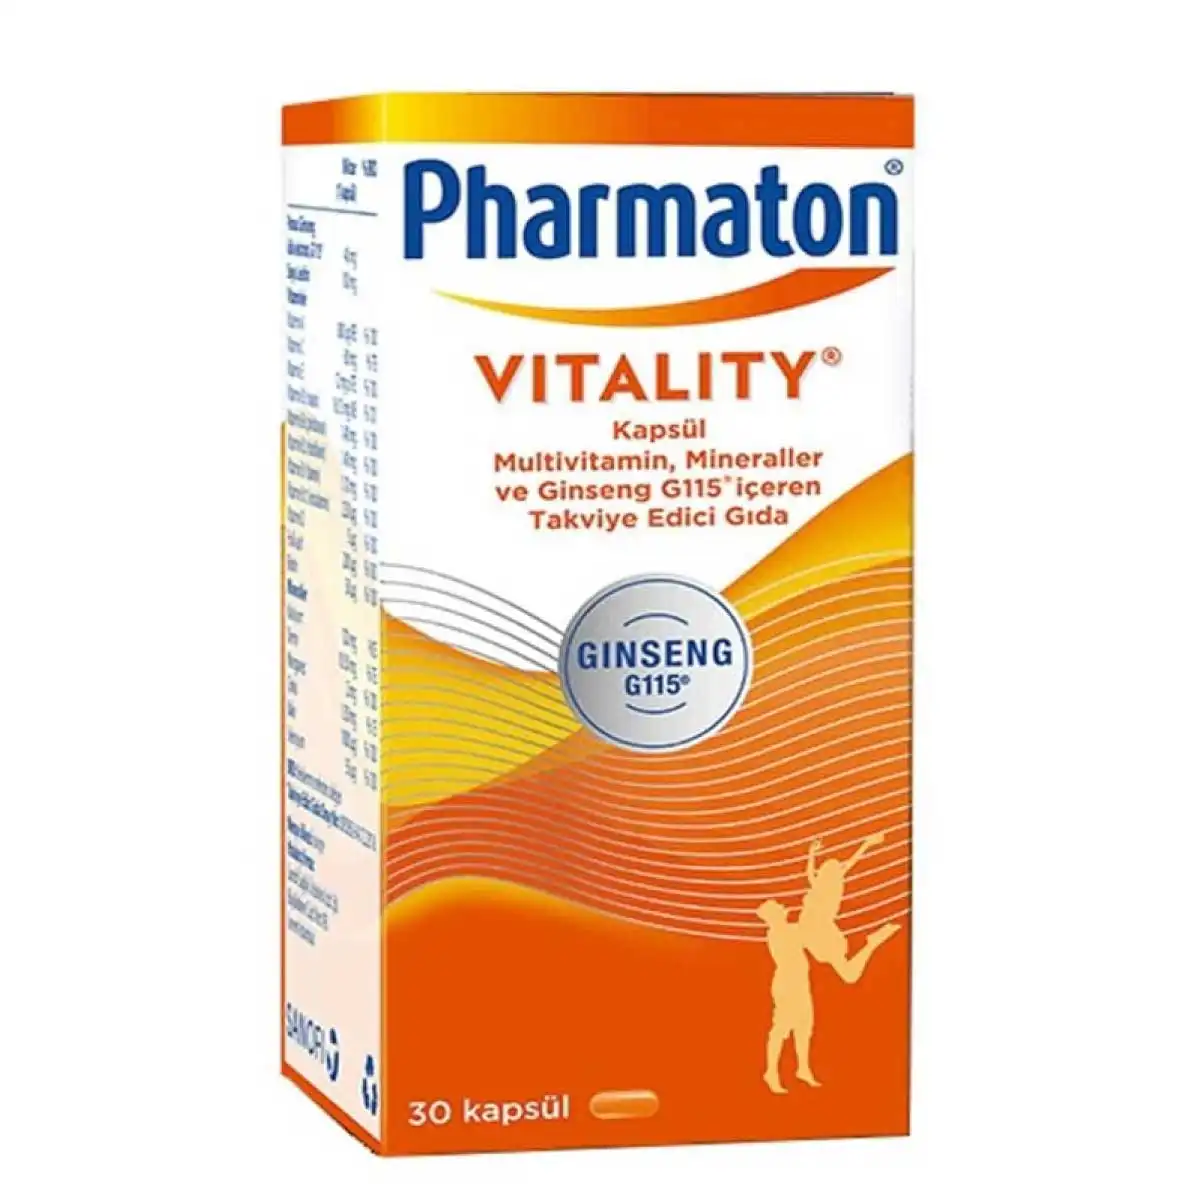 En İyi A Vitamini Takviyeleri Pharmaton Vitality Multivitamin ve A Vitamini 